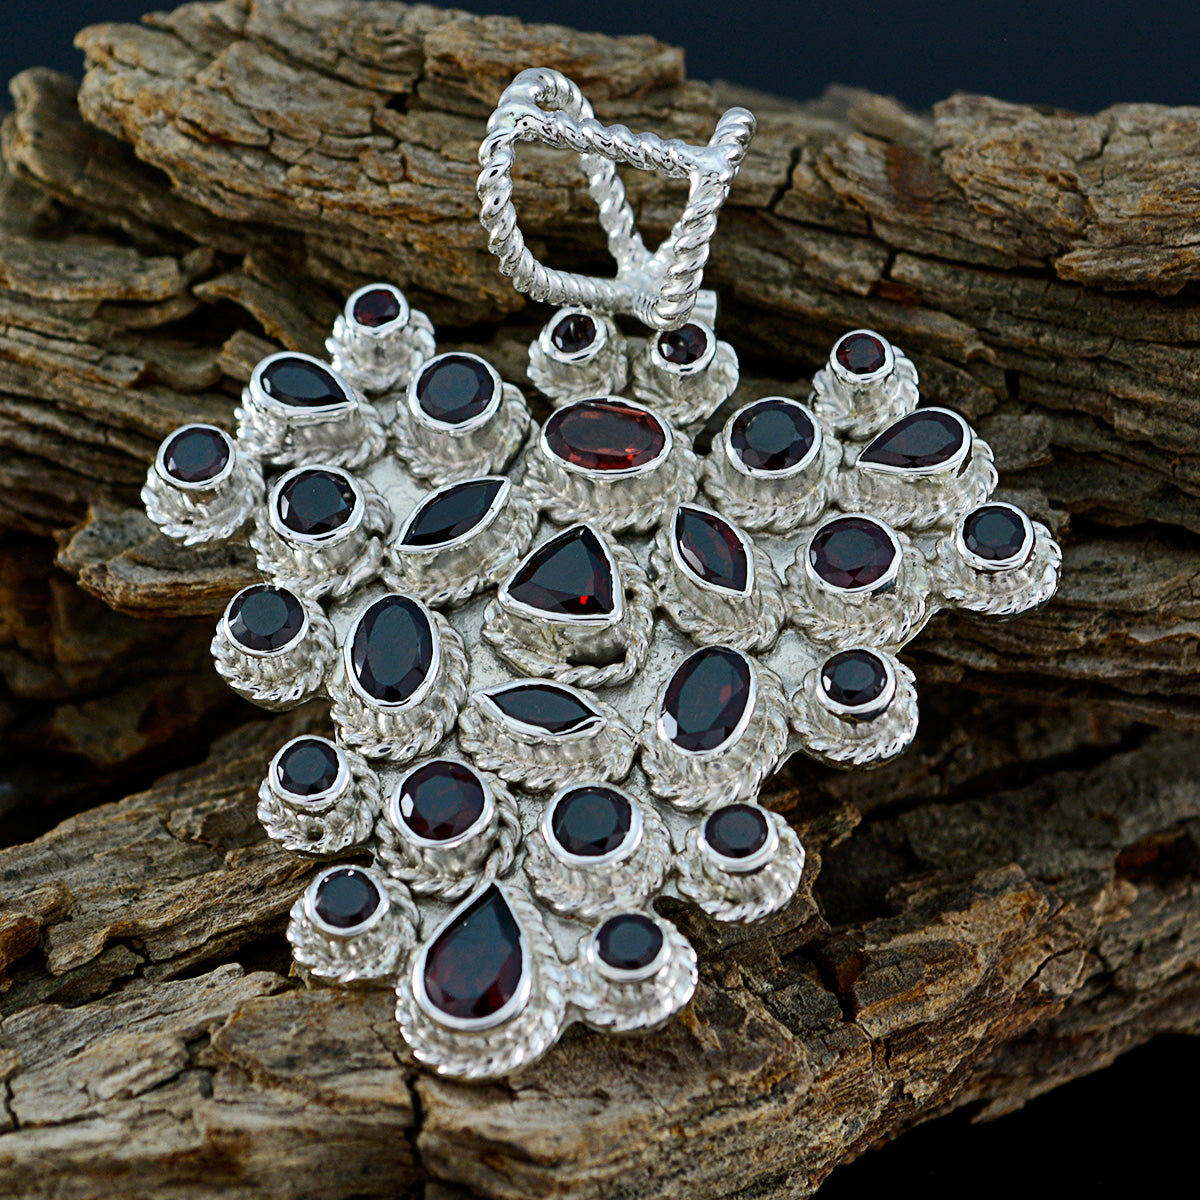 Riyo Real Gemstones Multi Shape Faceted Red Garnet Solid Silver Pendant gift for st. patricks day